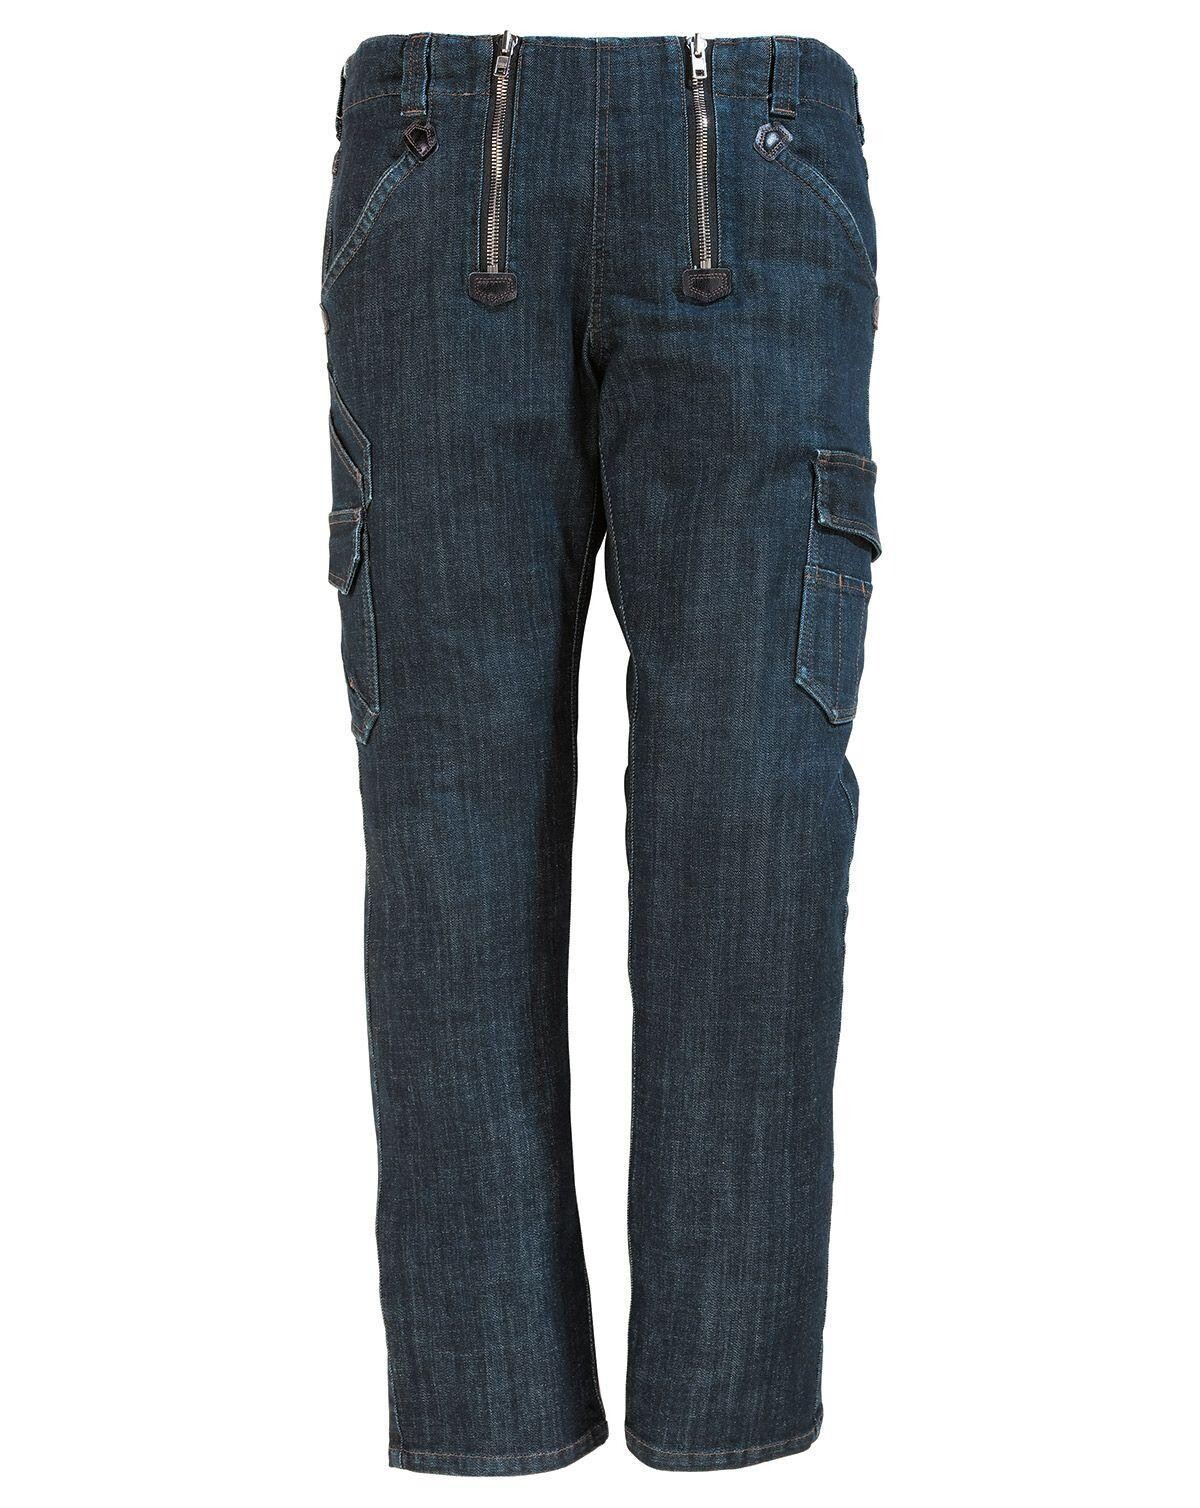 #3 - FHB Naver Bukser i Stretch Jeans - FRIEDHELM (Blå / Sort, W38/L34 - 54)